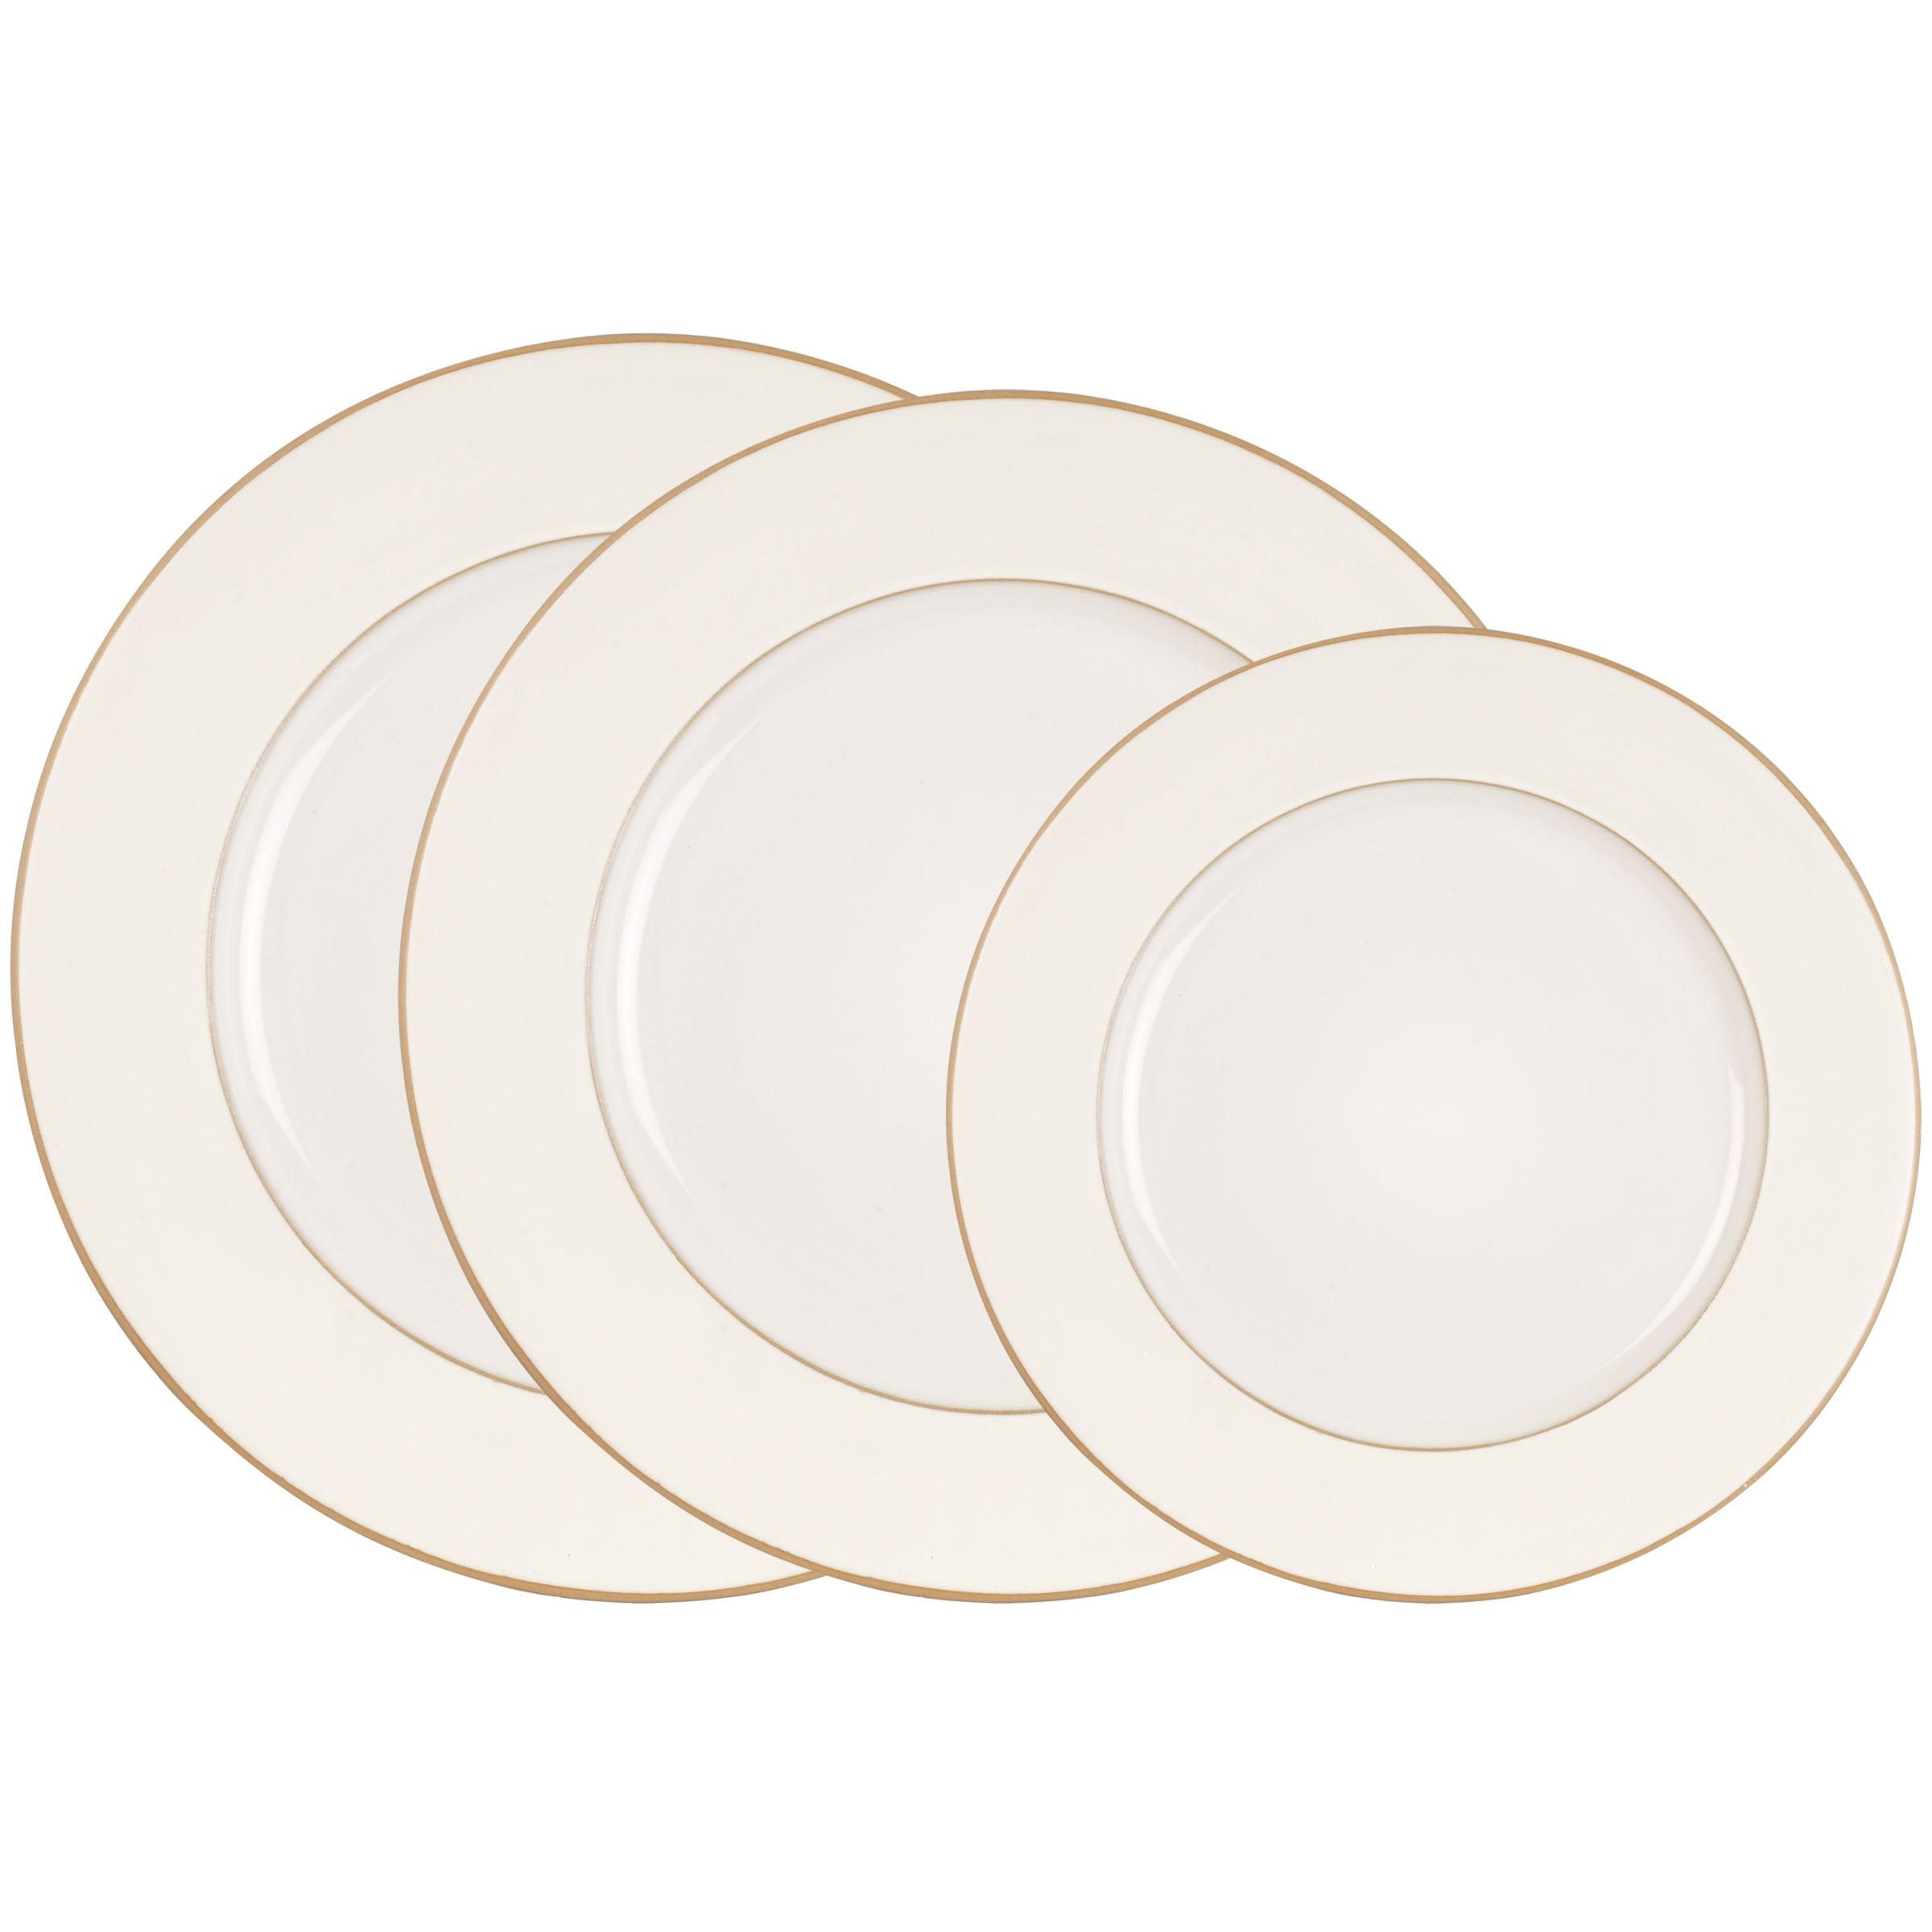 John Lewis Studio Stoneware Plates, Cream